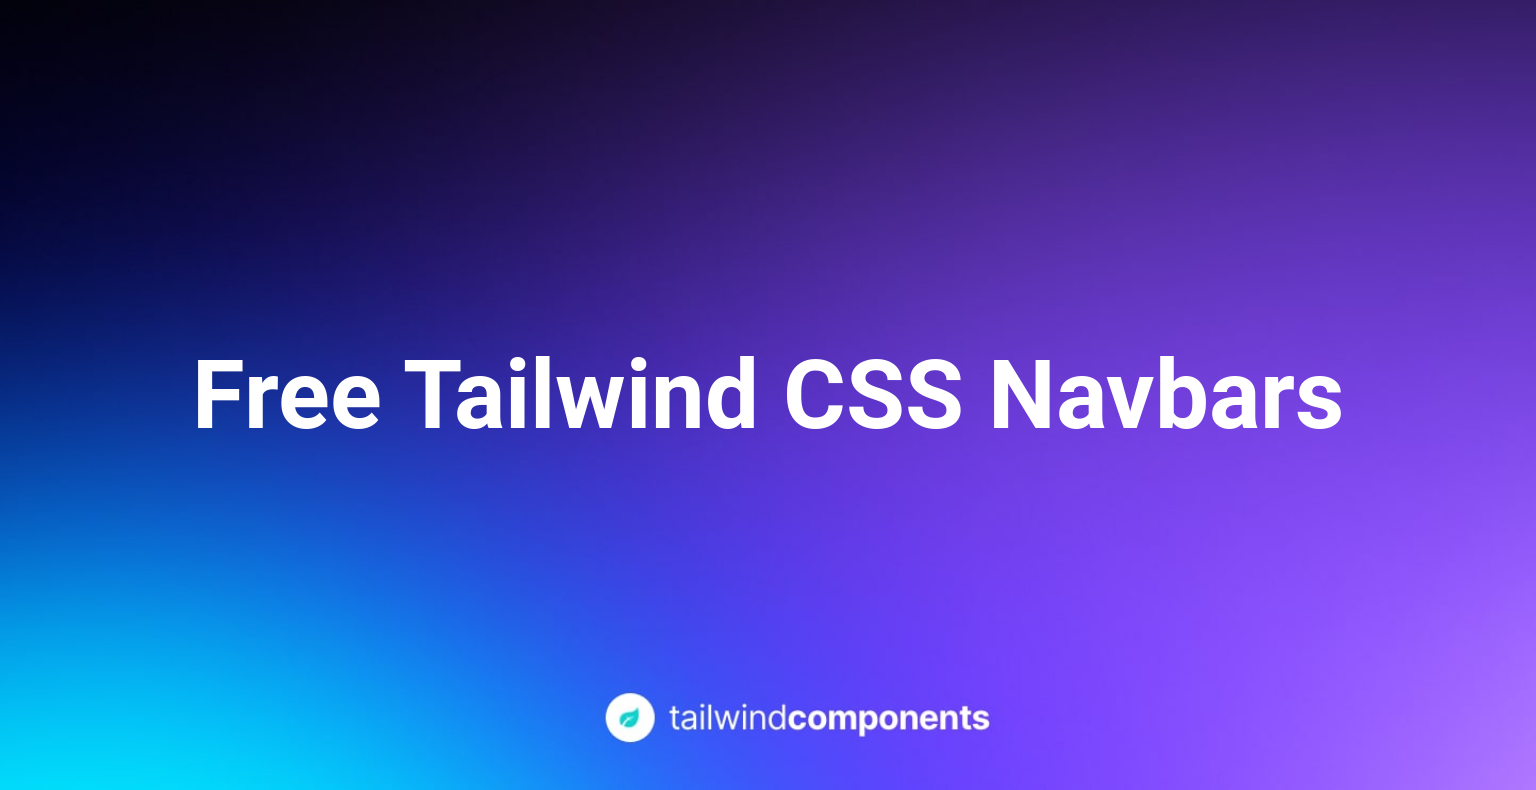 Free Tailwind CSS Navbars Image